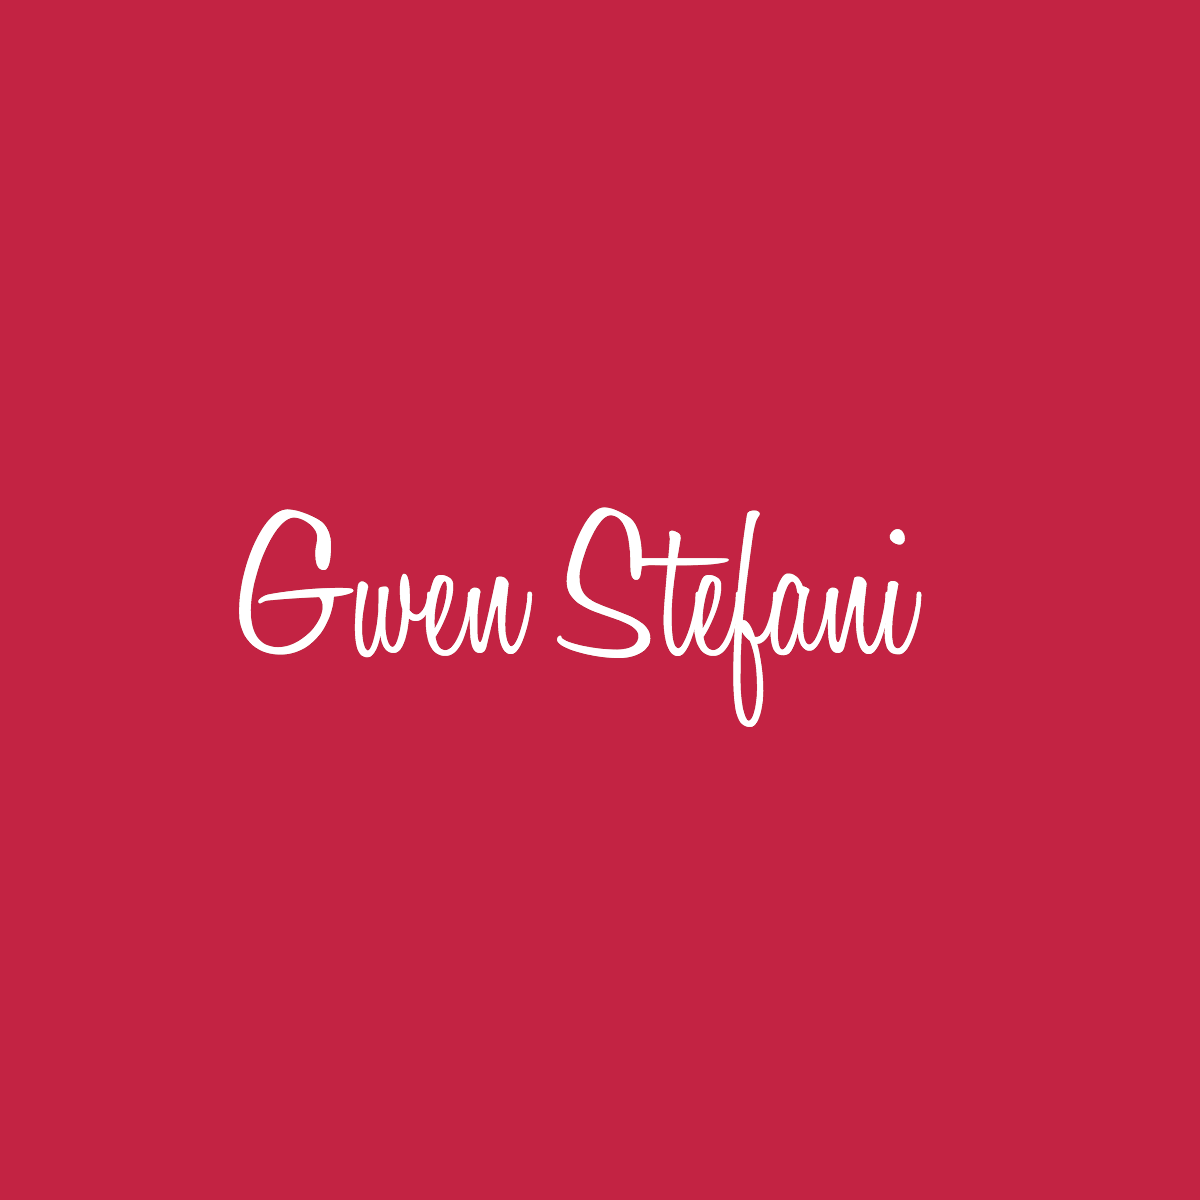 GwenStefani-Cover.png